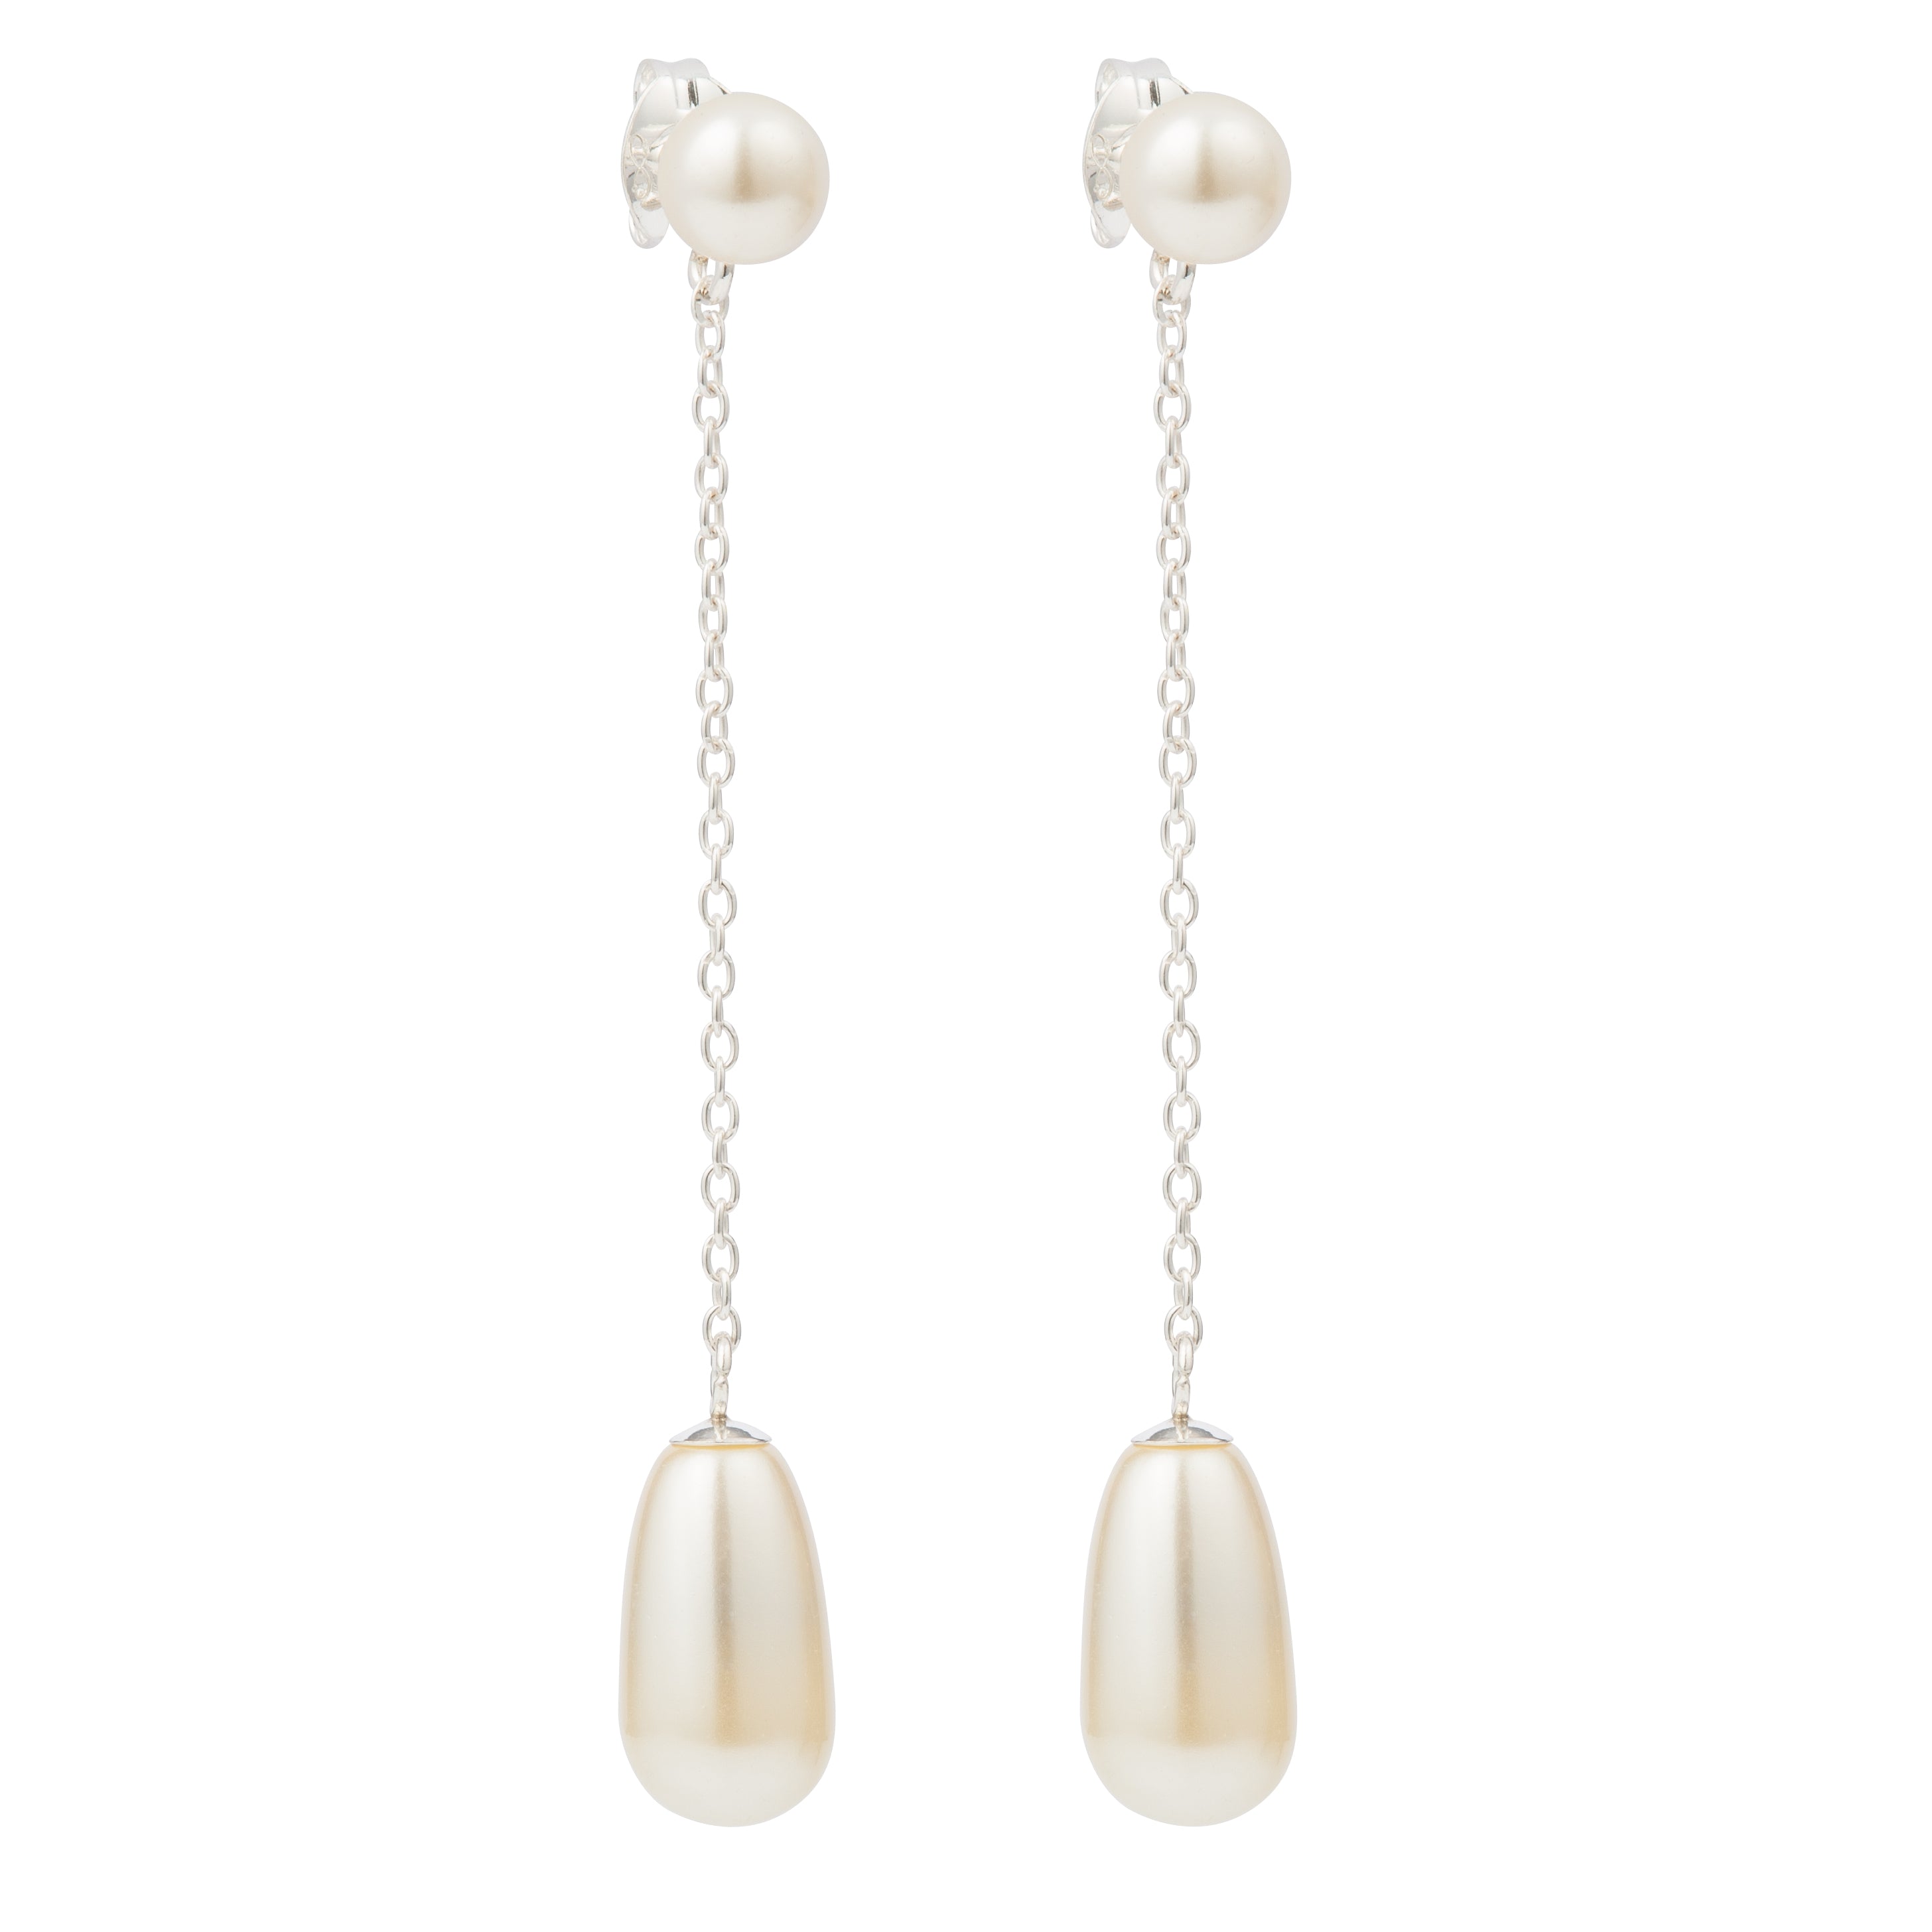 Sterling Silver Earrings with Swarovski Pearls